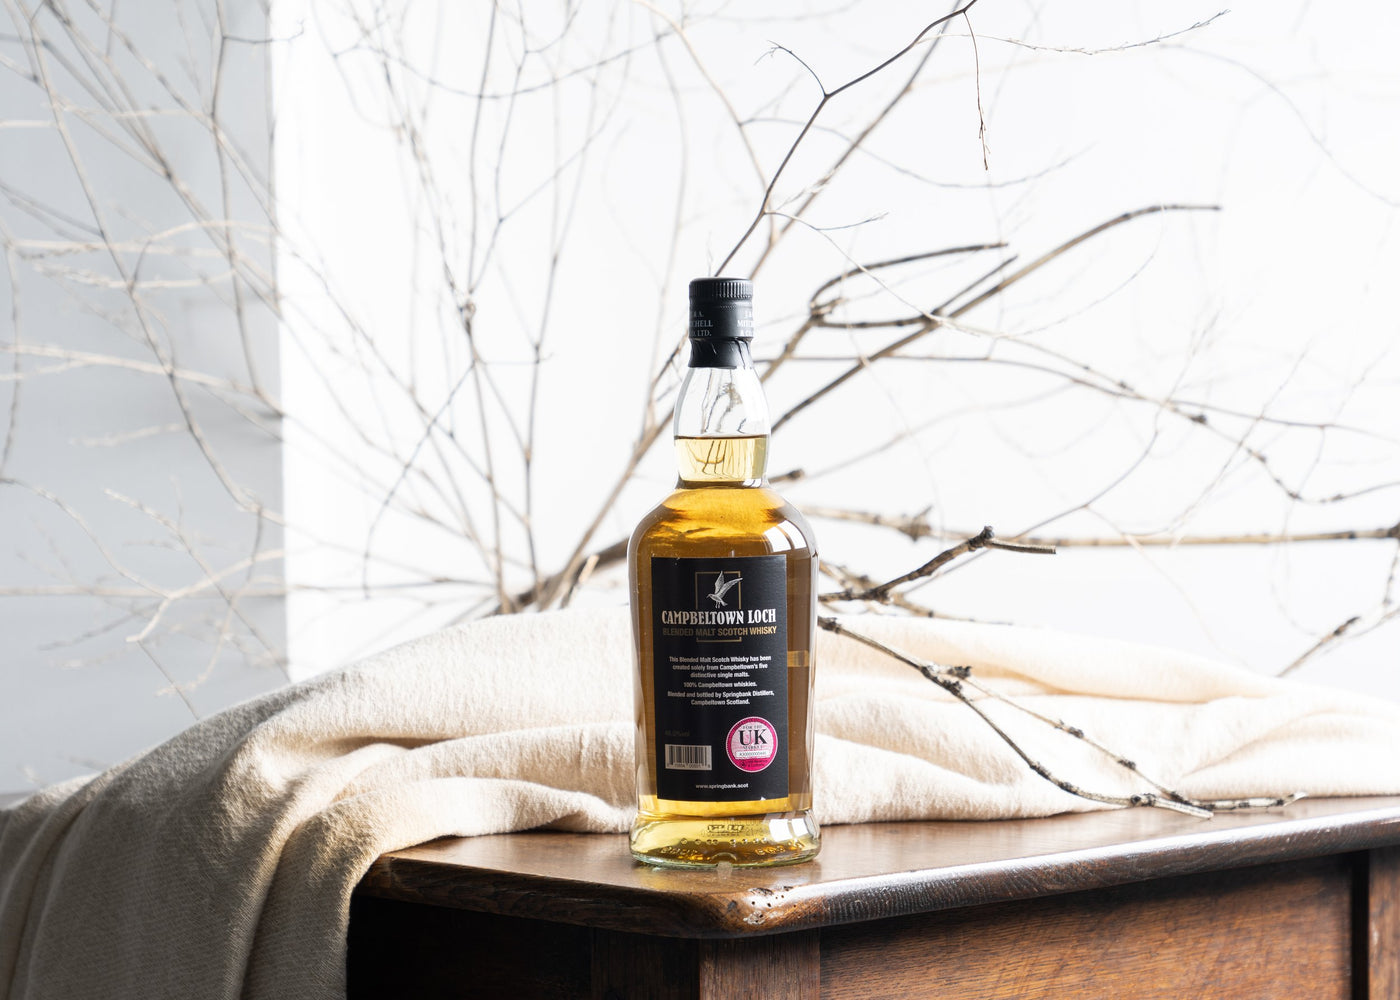 Springbank Campbeltown Loch Blended Whisky